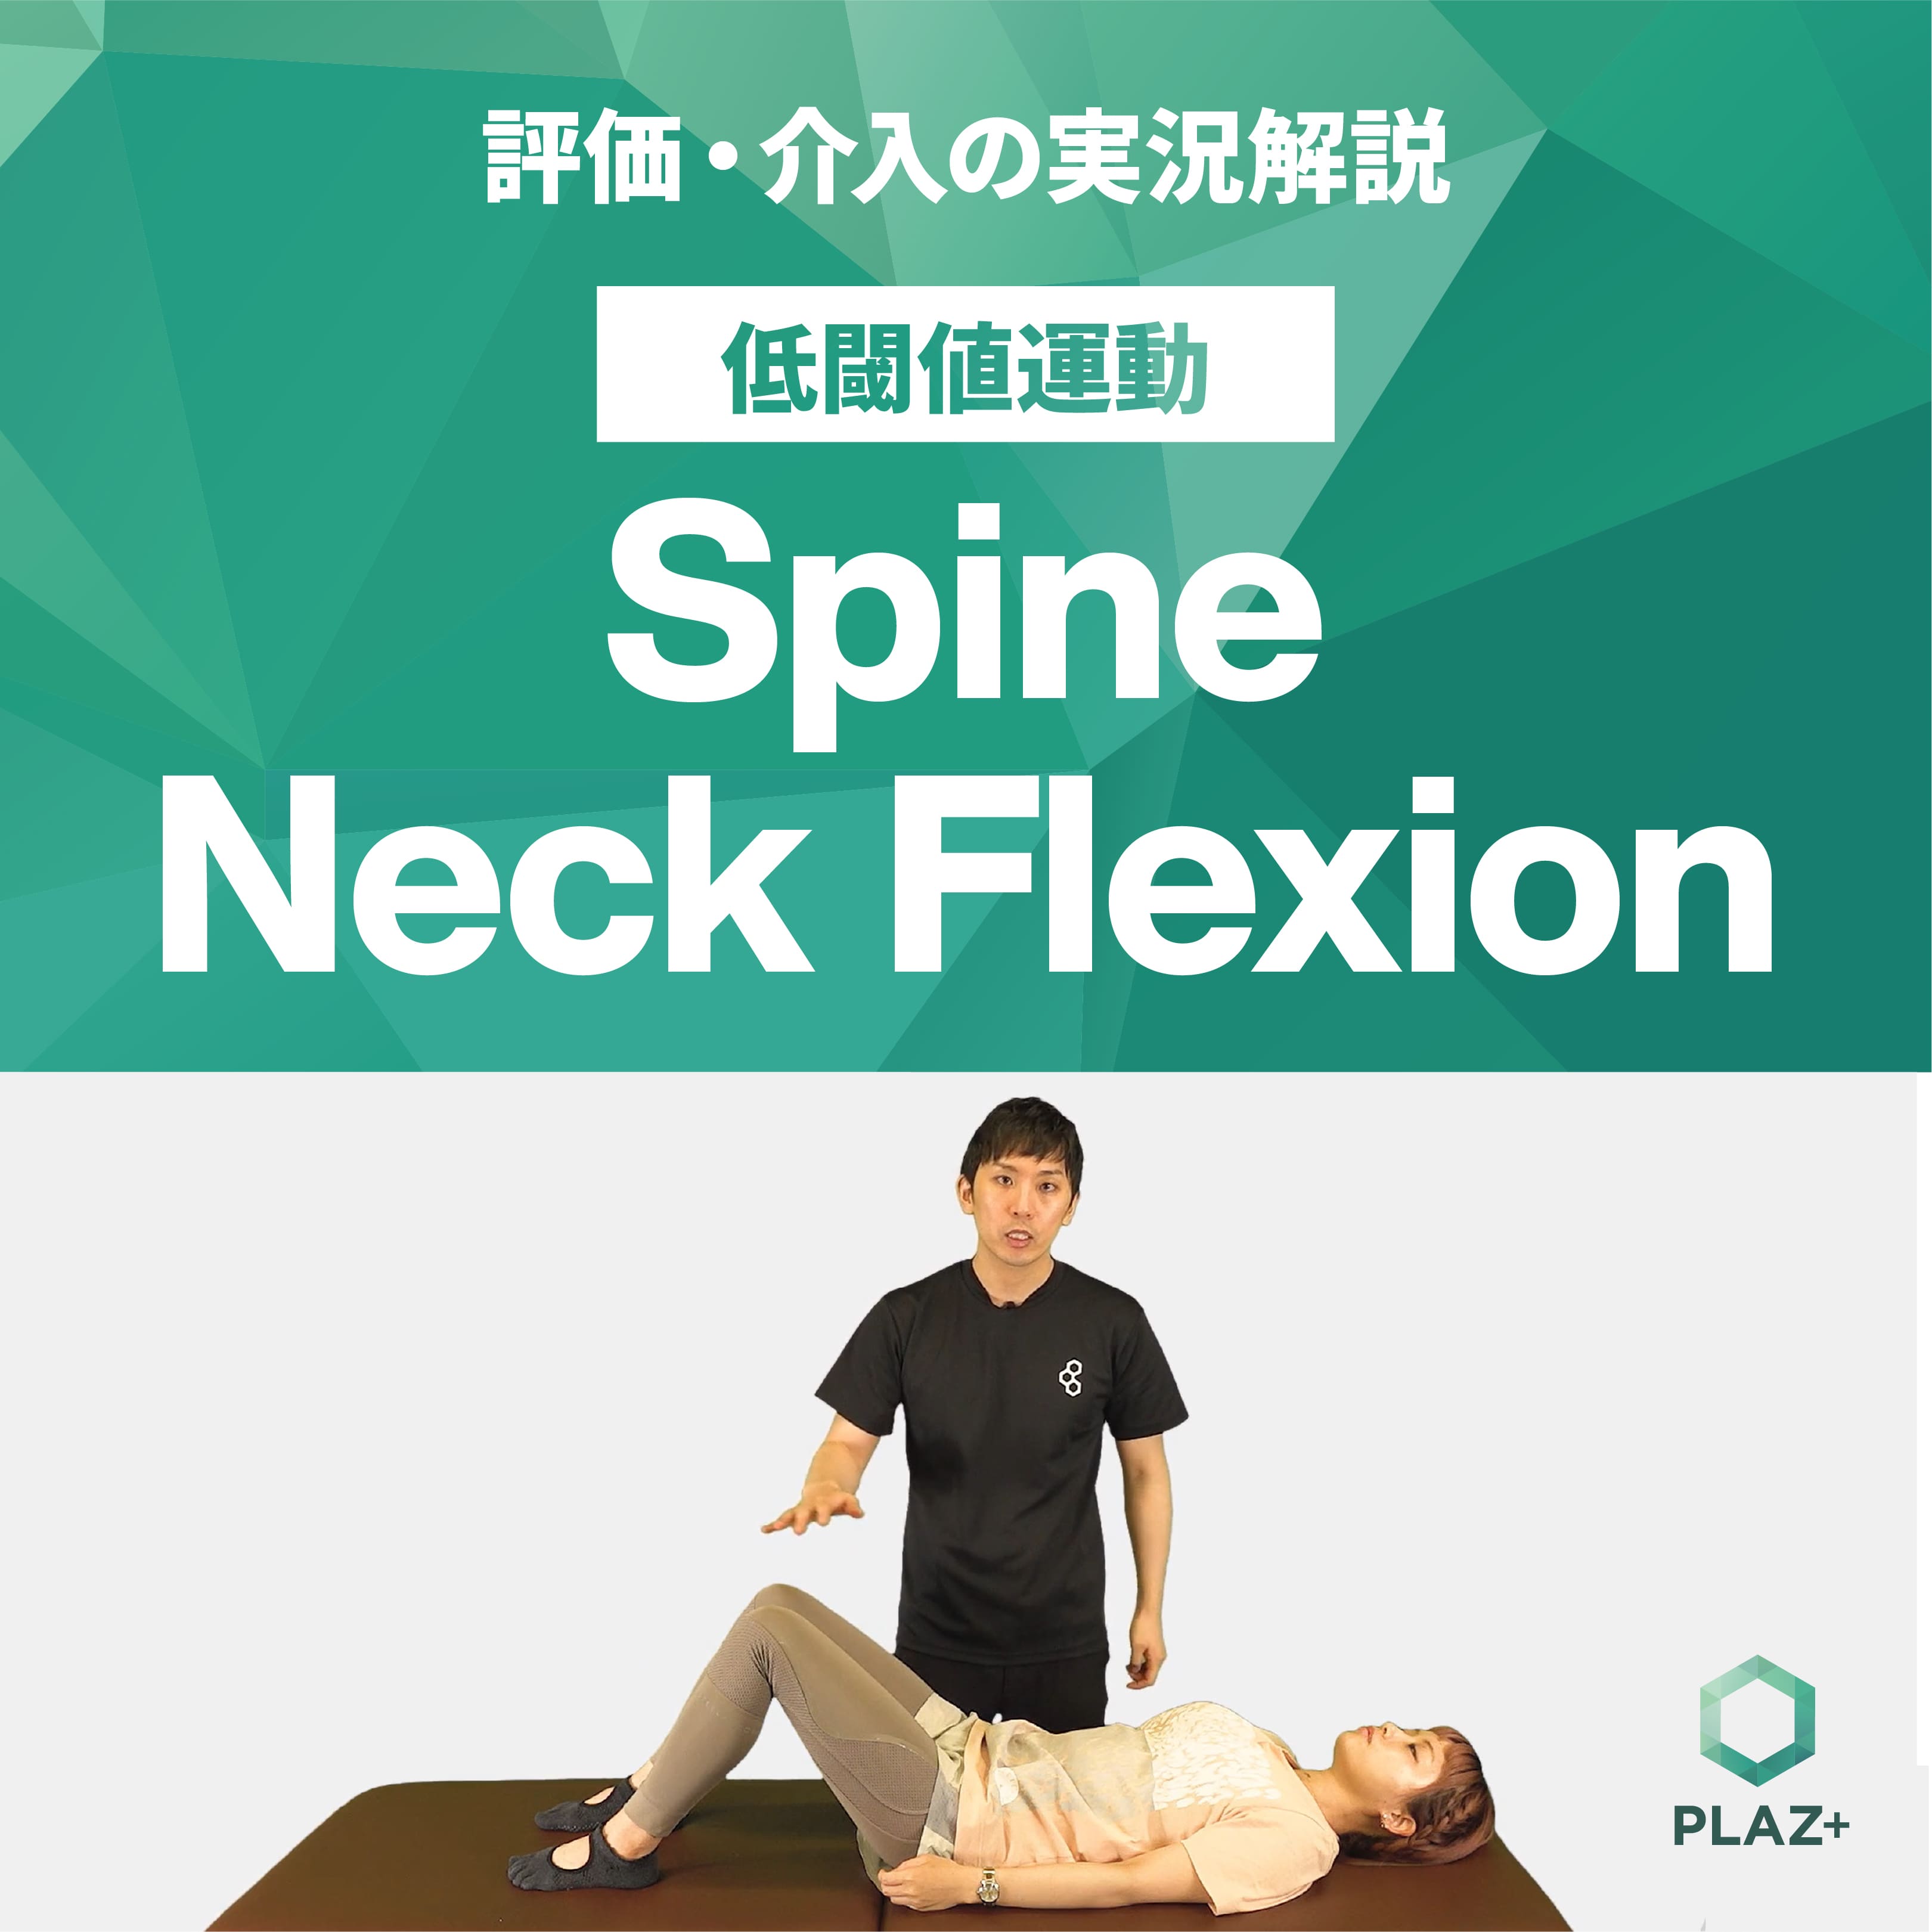 Supine Neck Flexion